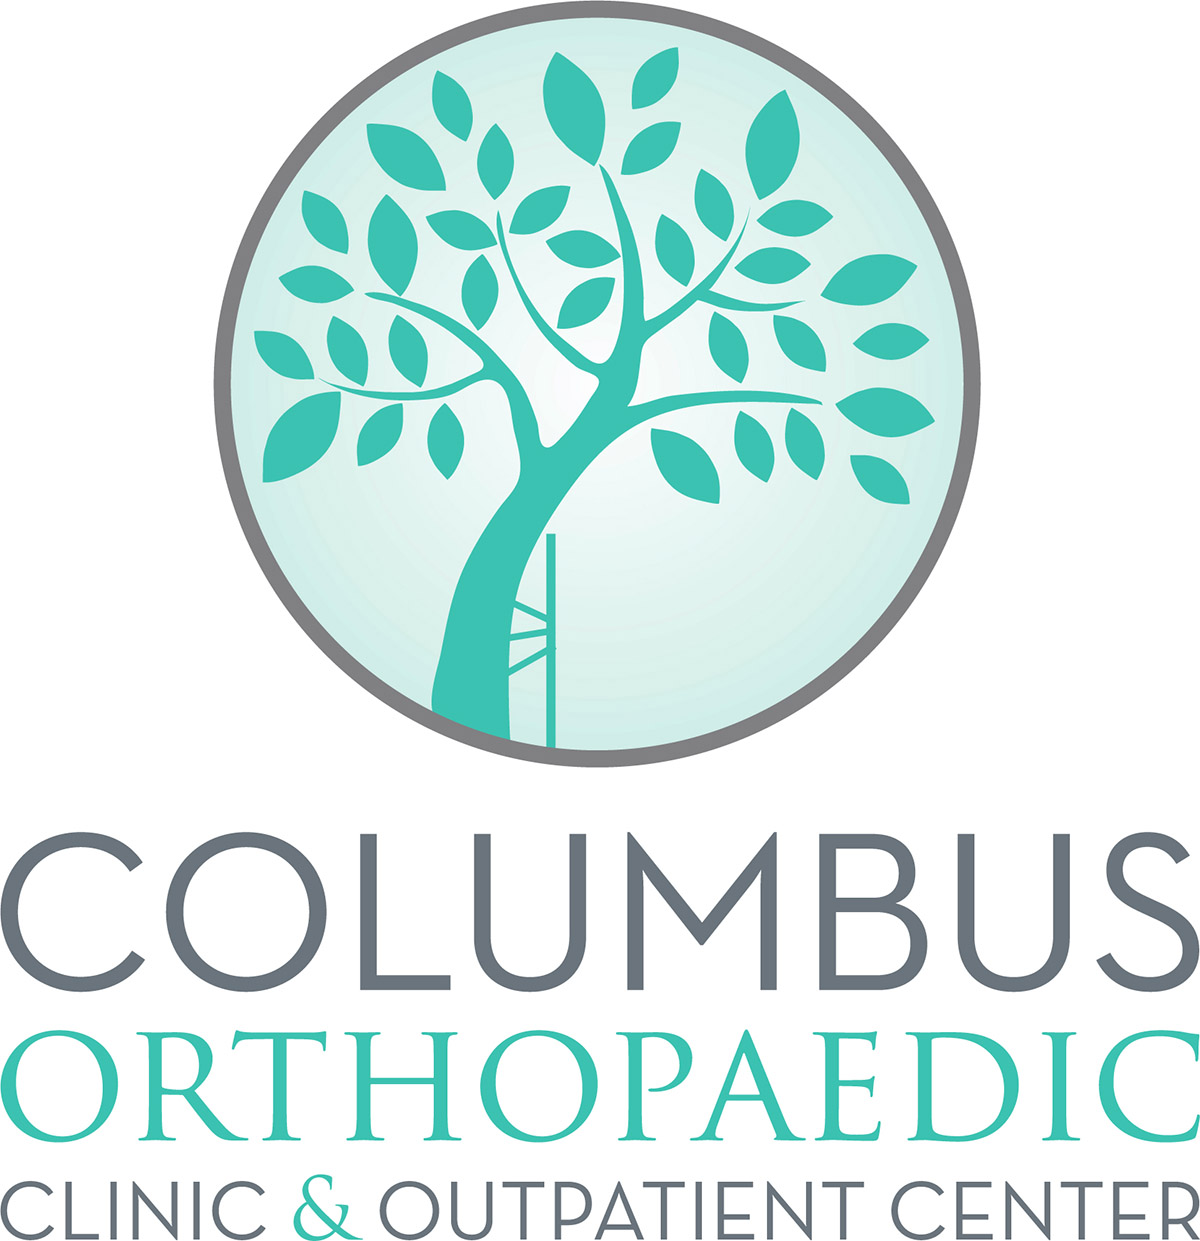 Columbus Orthopaedic Clinic Re-Brand 